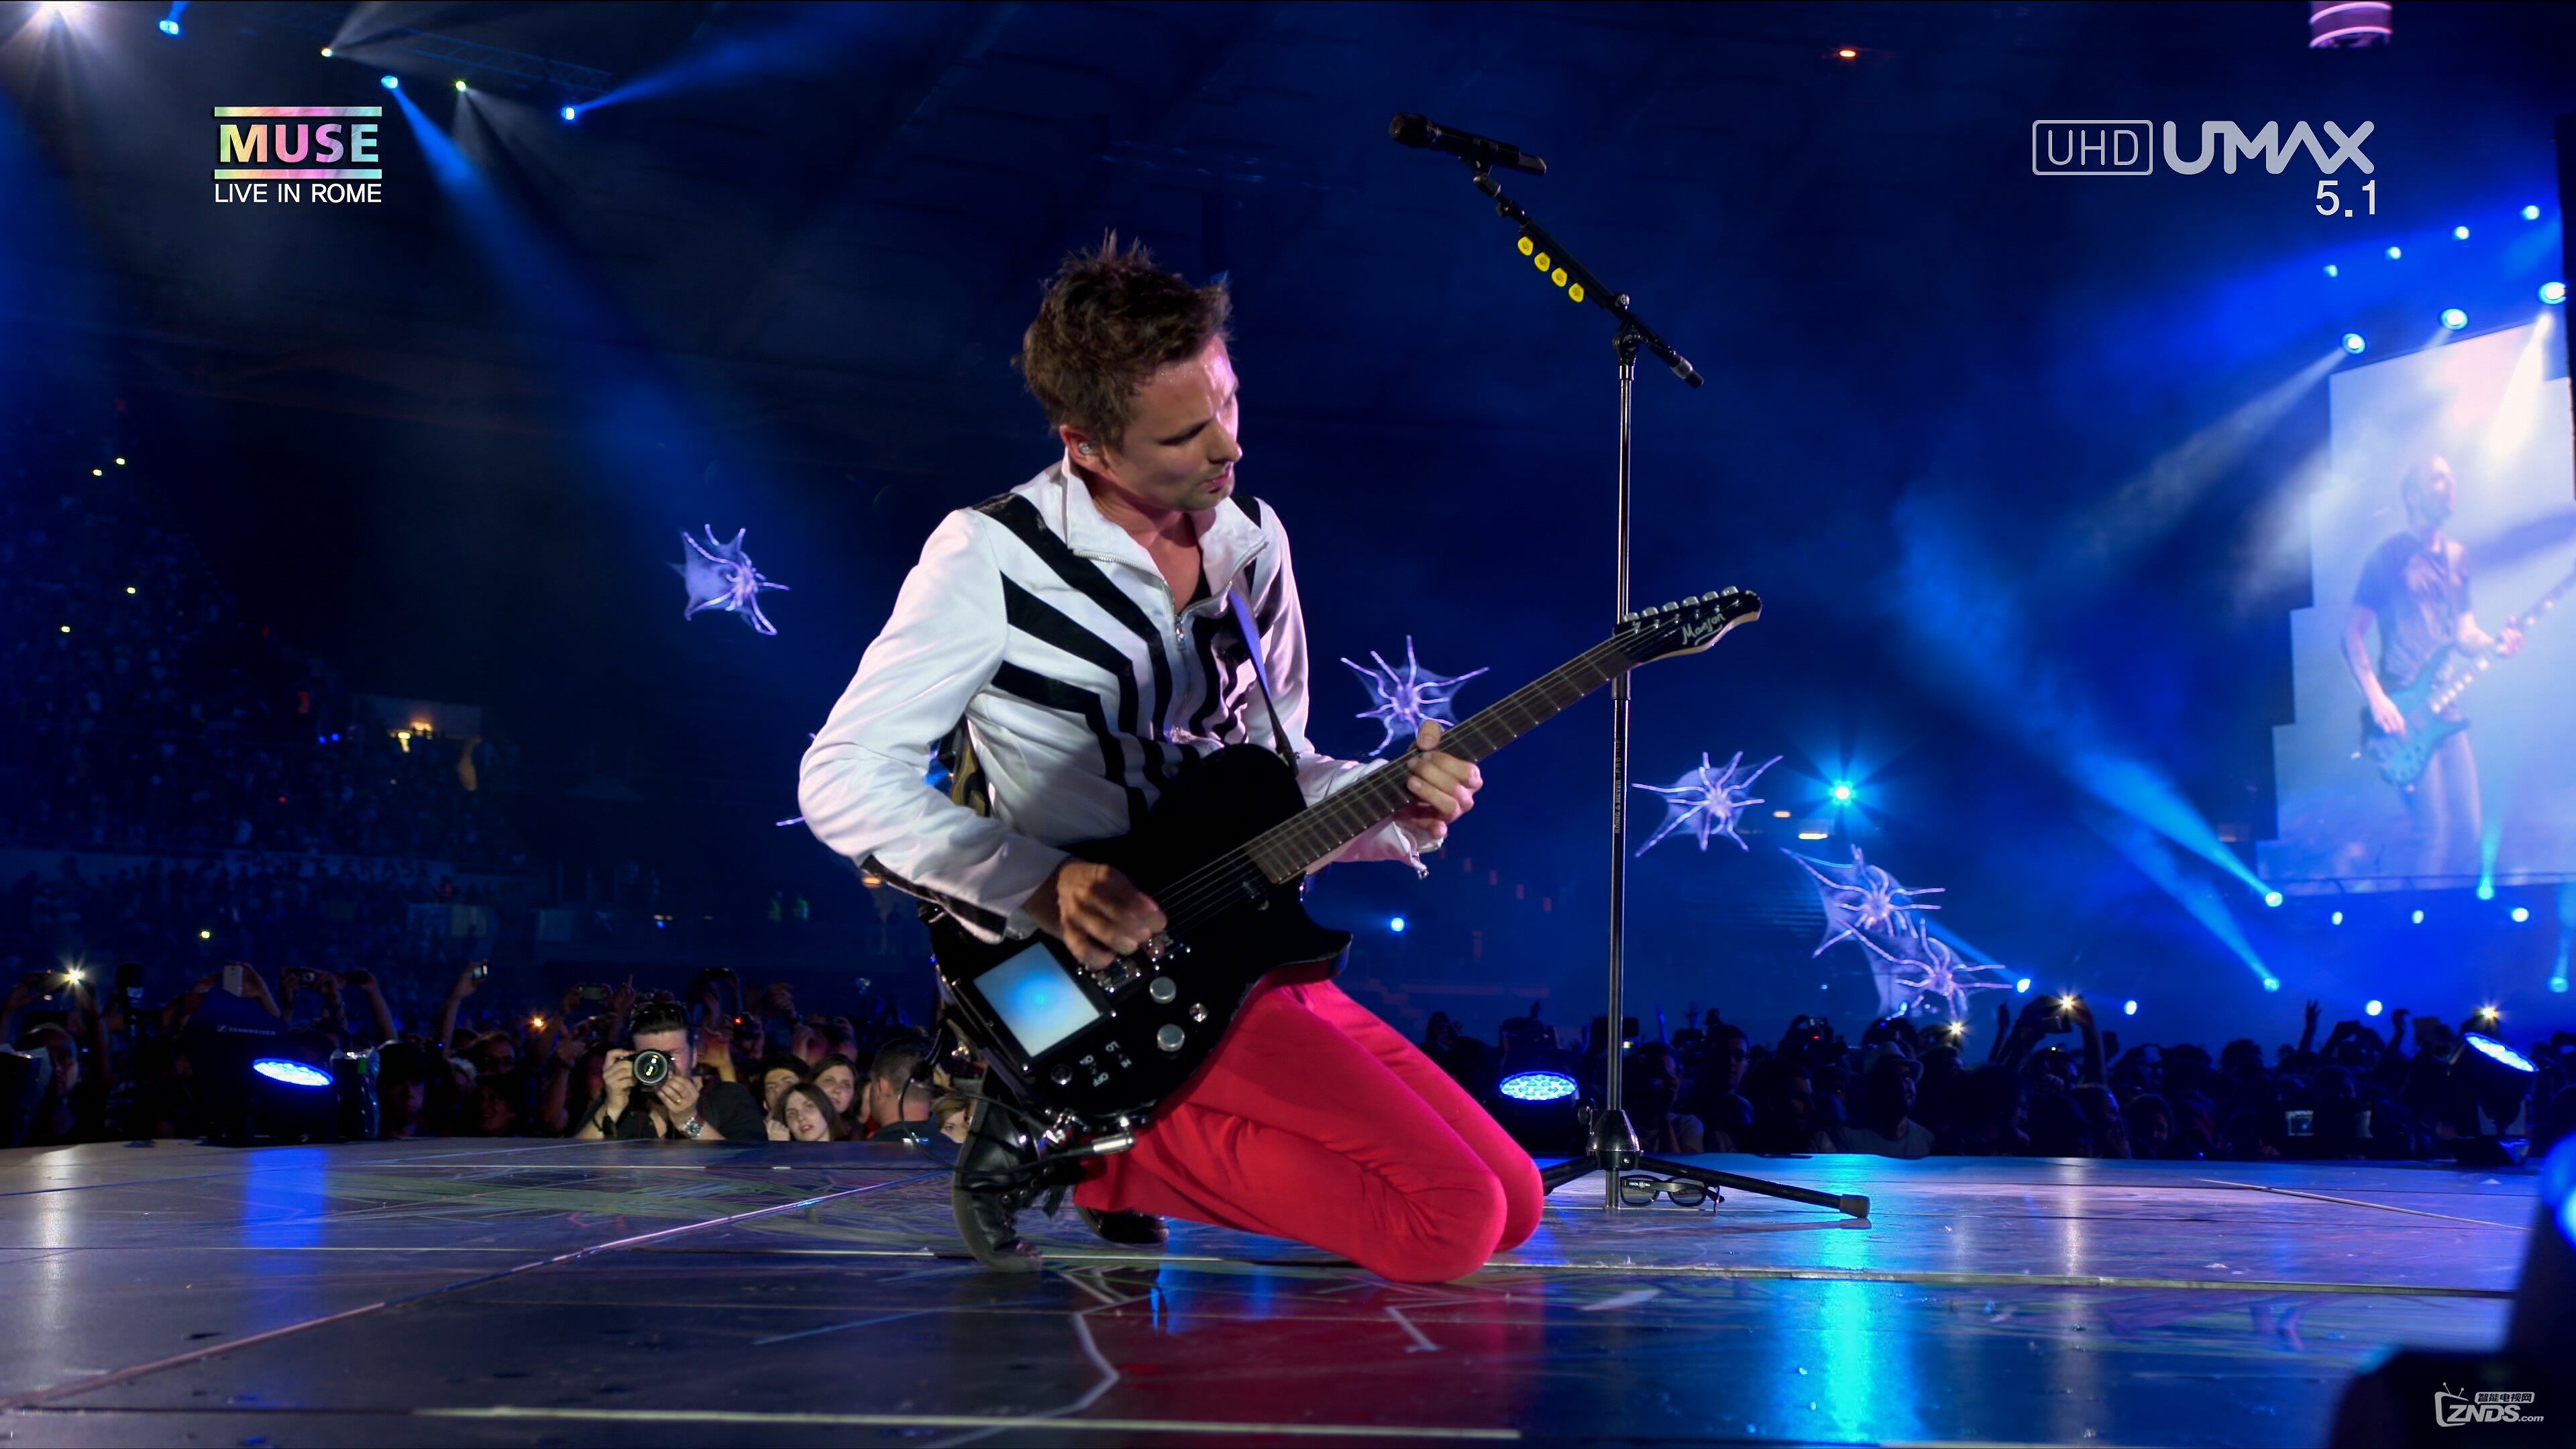 Muse.Live.At.Rome.Olympic.Stadium.2013.2160p.UHDTV.HEVC.mkv_20160312_231619.281.jpg